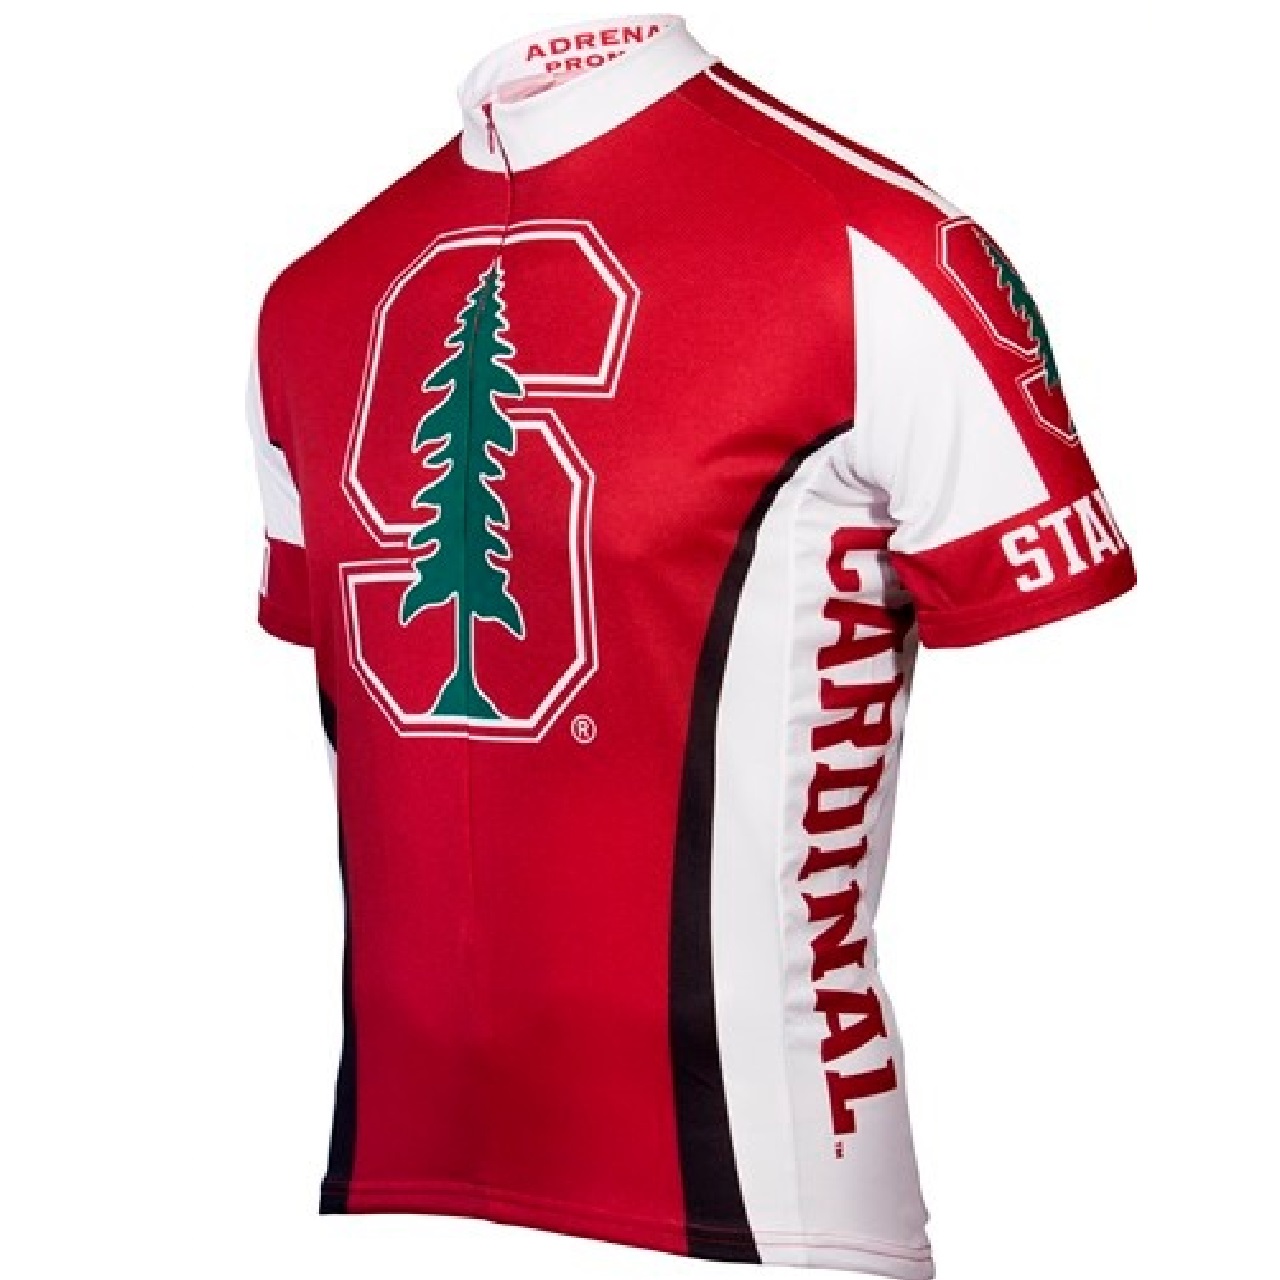 Adrenaline Promo Stanford University Cardinals College 3/4 zip Men's Cycling Jersey